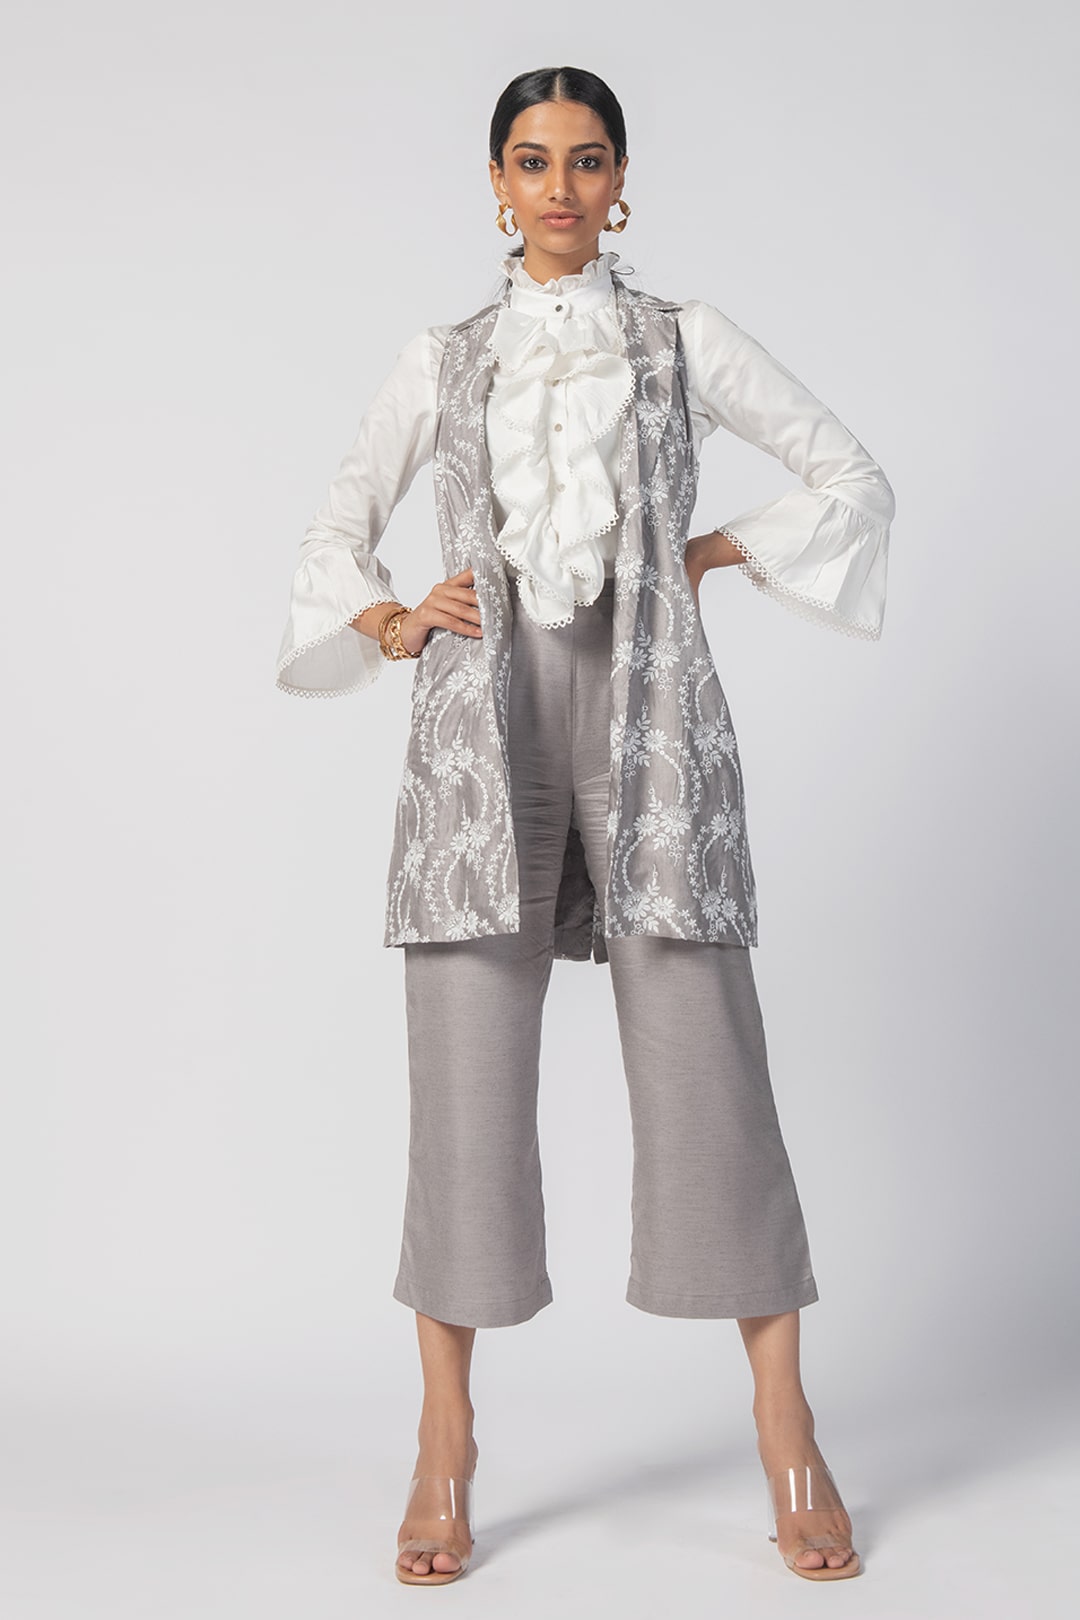 Mulmul Wool Tiare Grey Jacket With Tiare Grey Pant Co-Ord Set